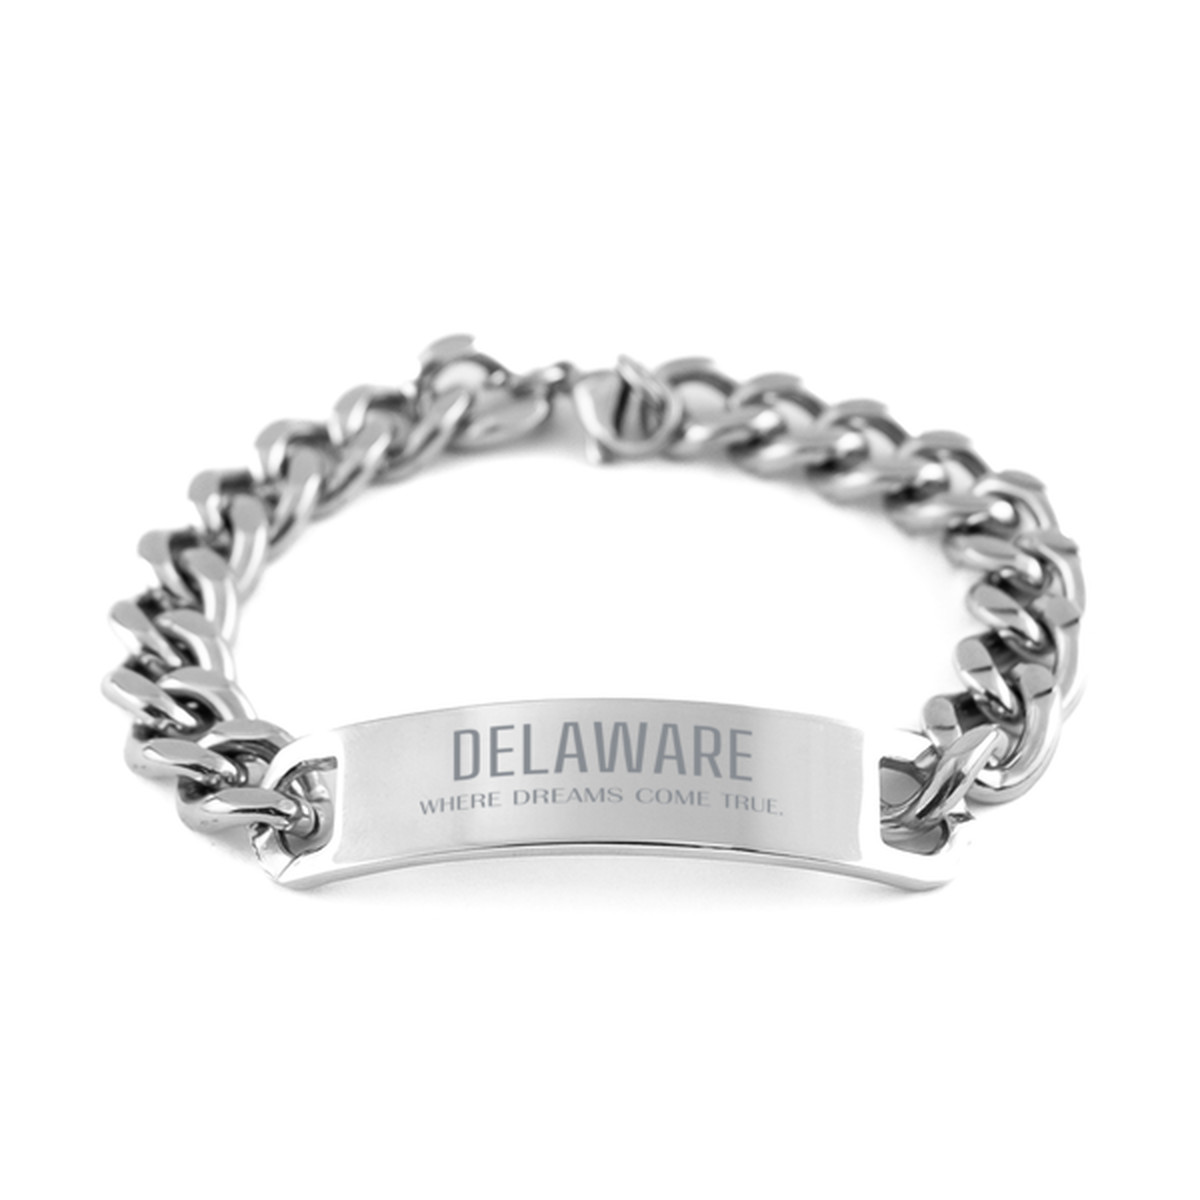 Love Delaware State Cuban Chain Stainless Steel Bracelet, Delaware Where dreams come true, Birthday Inspirational Gifts For Delaware Men, Women, Friends